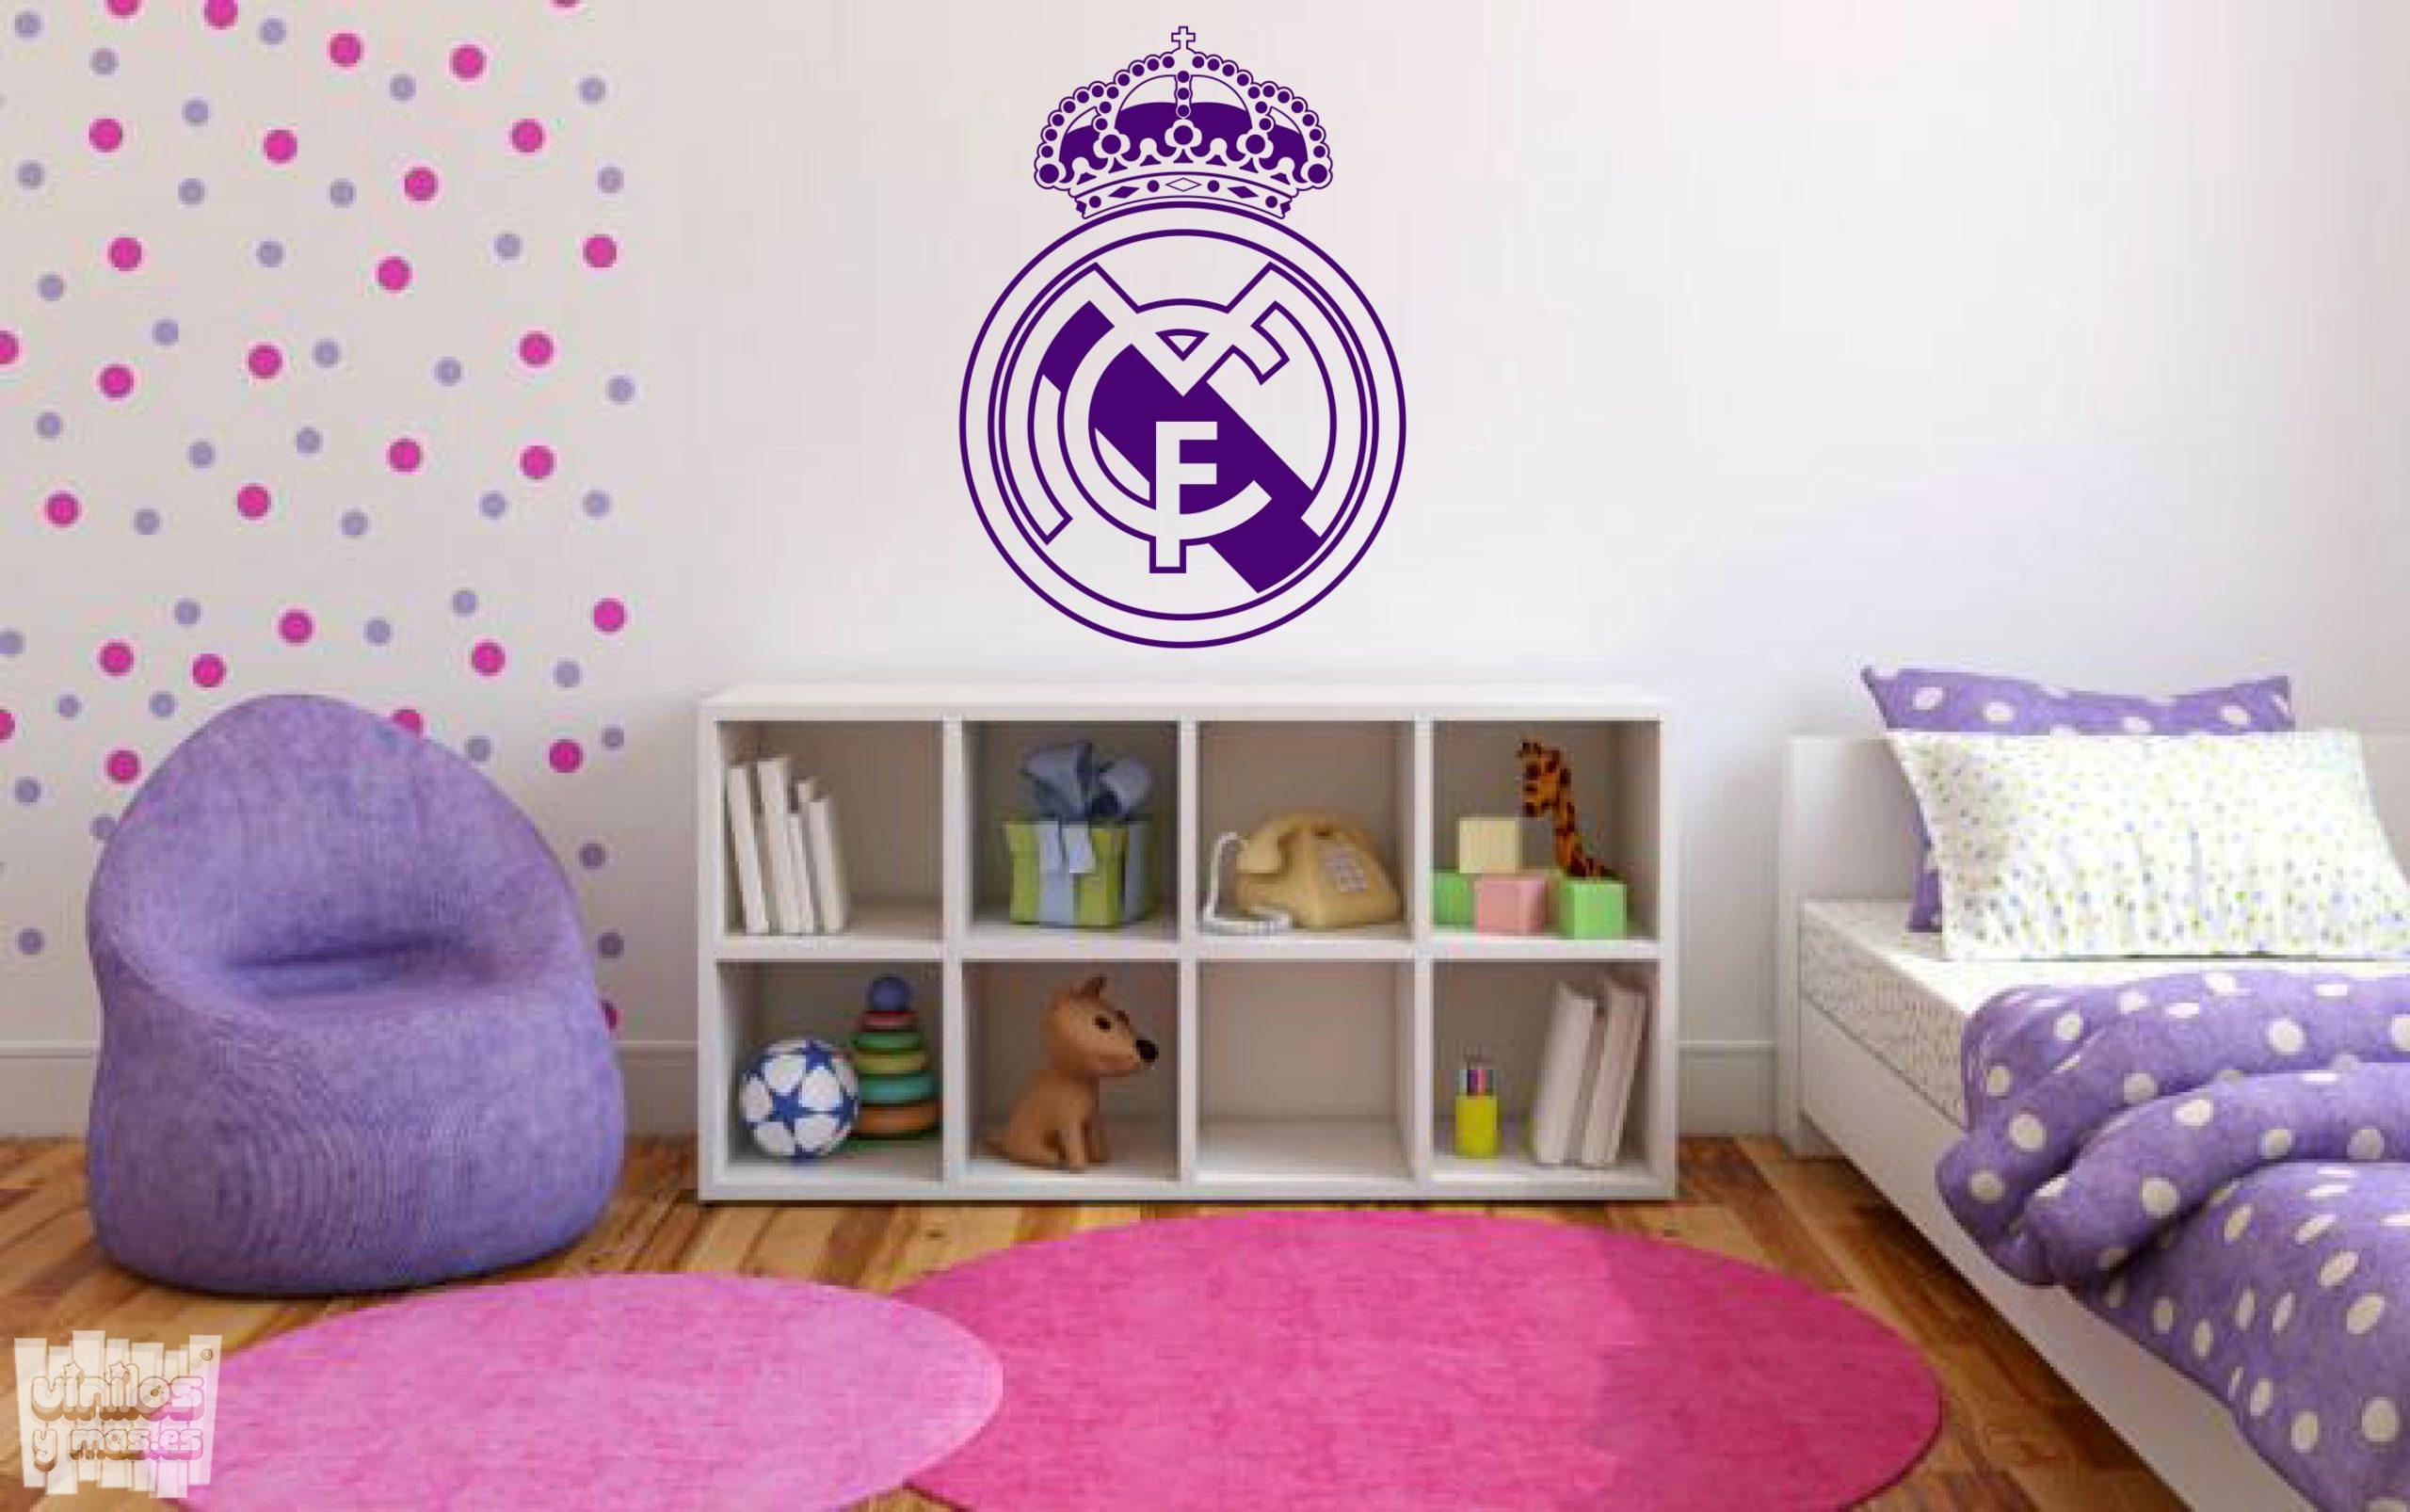 Escuela Adheribles Real Madrid - Escuela Vinil Real Madrid\